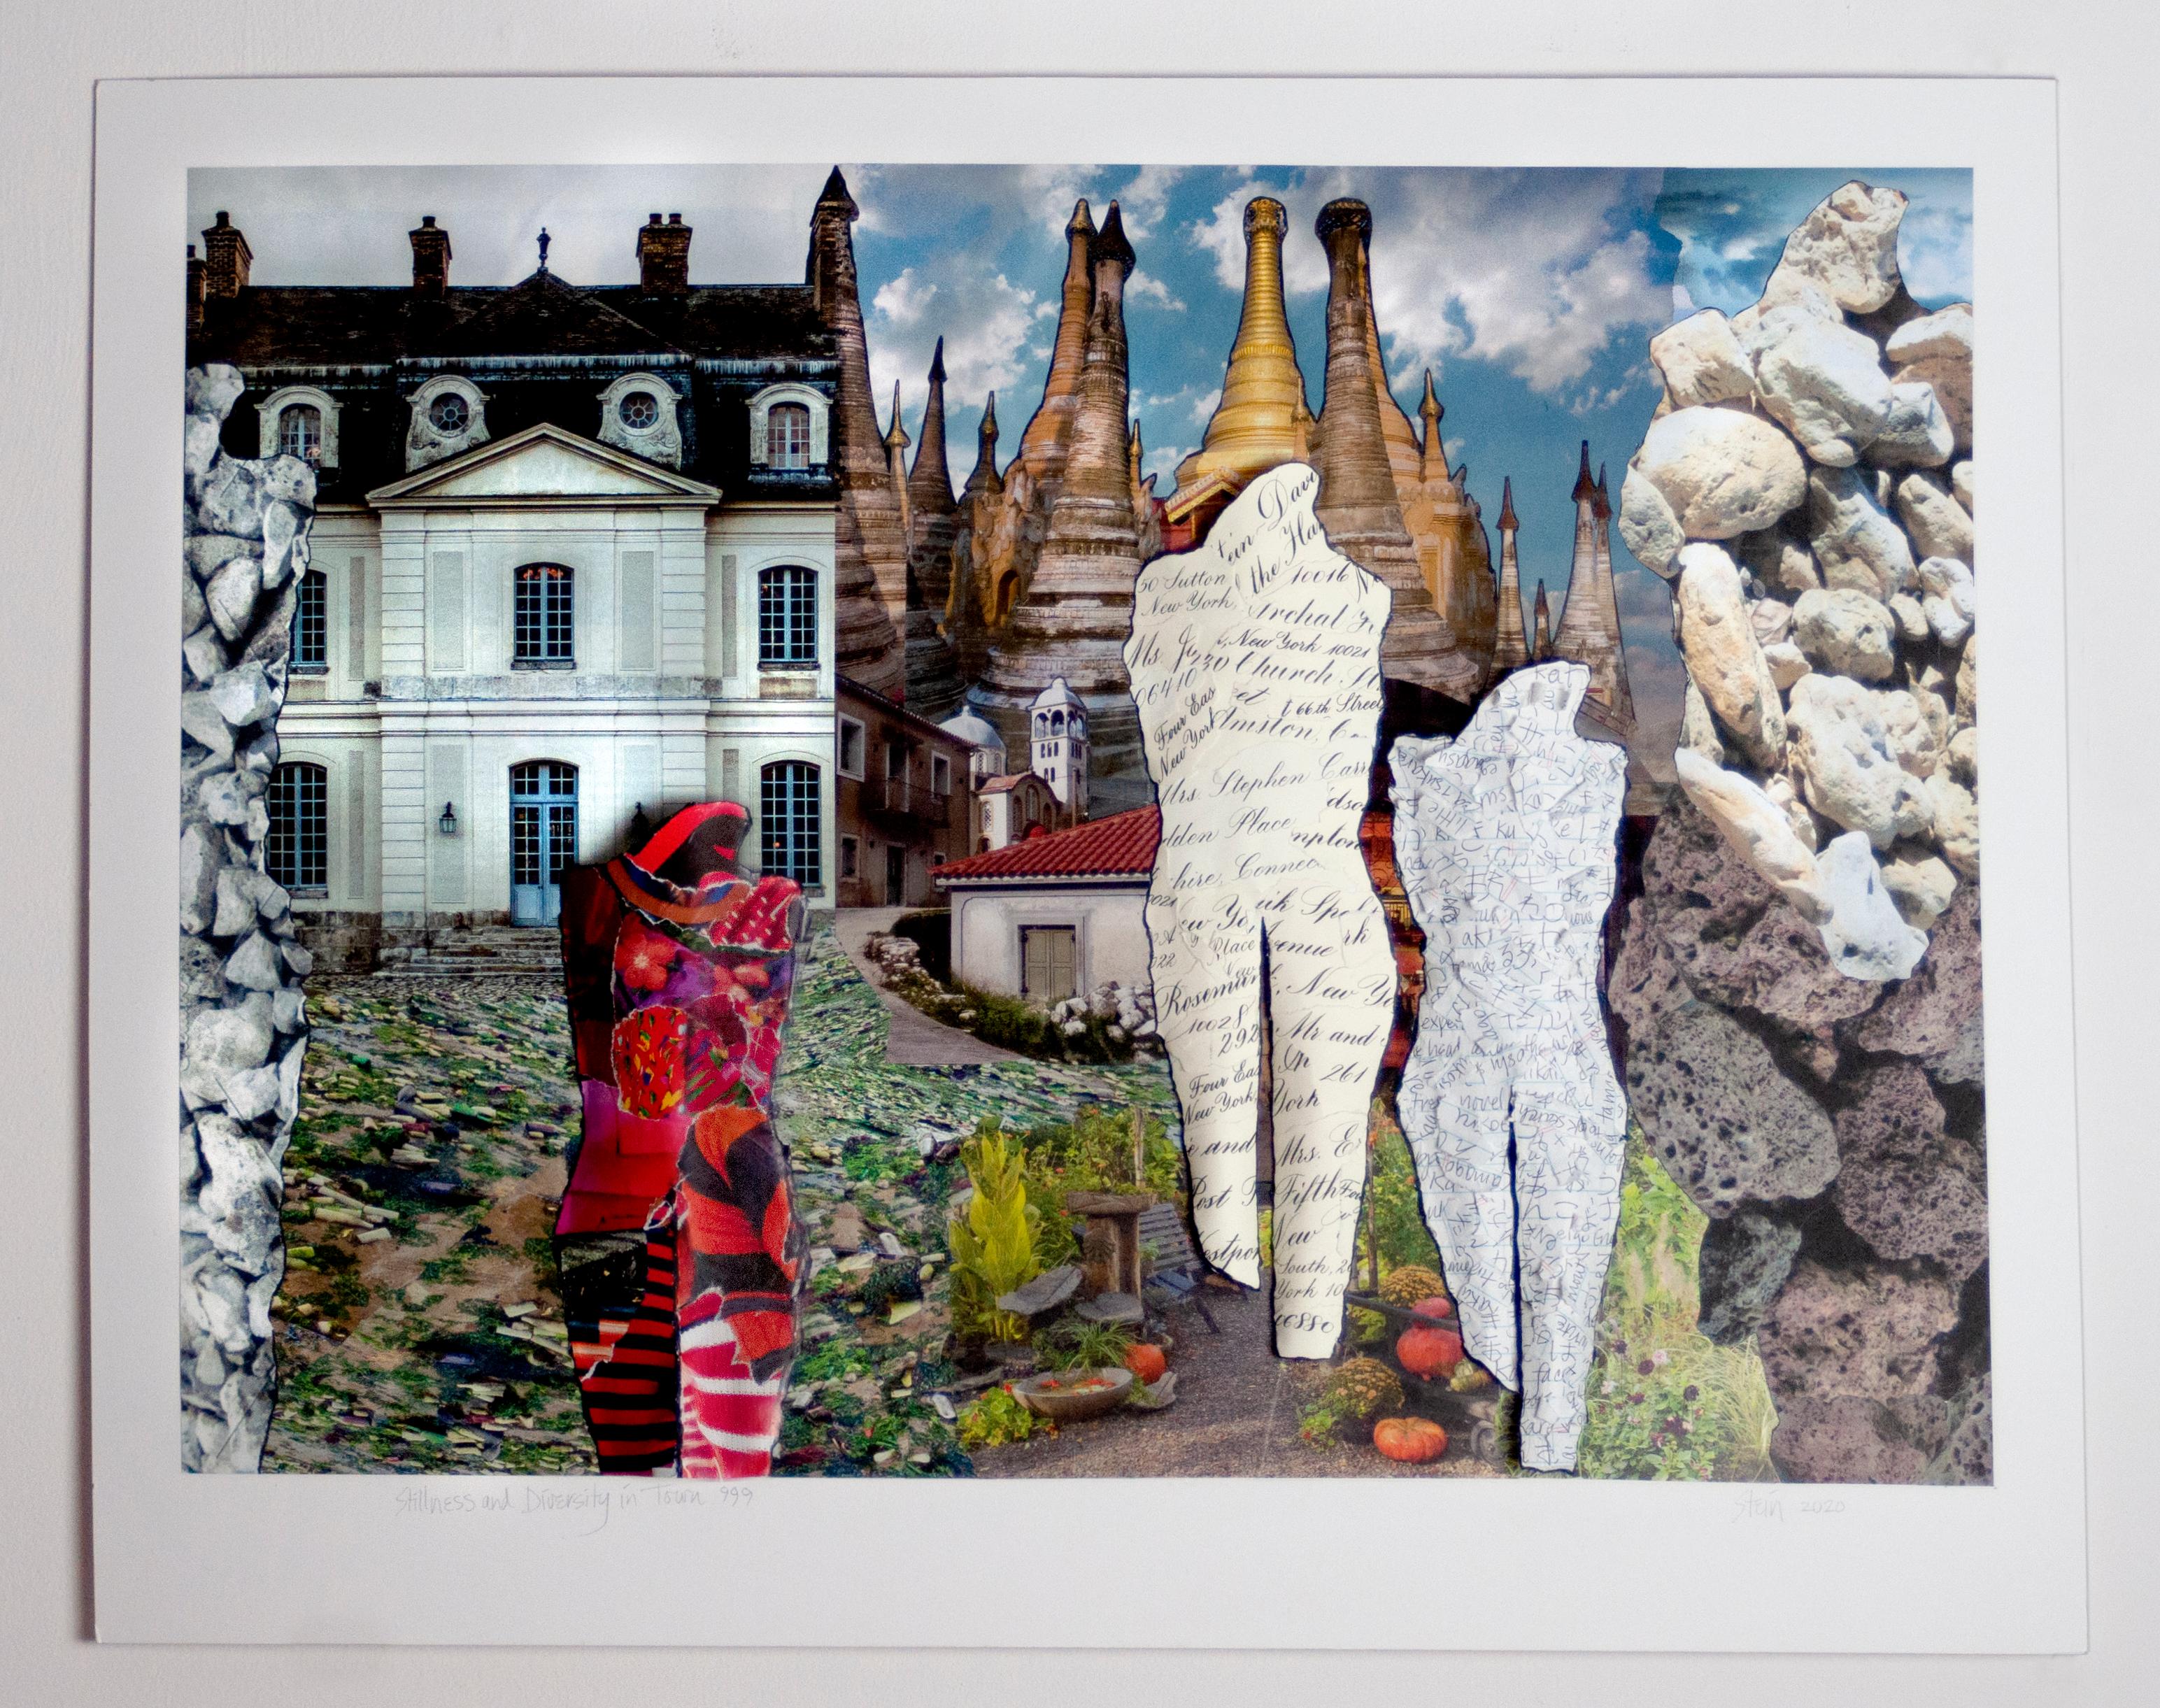 Linda Stein, Stillness and Diversity in Townes 999 Collage contemporain de dessins en 3D